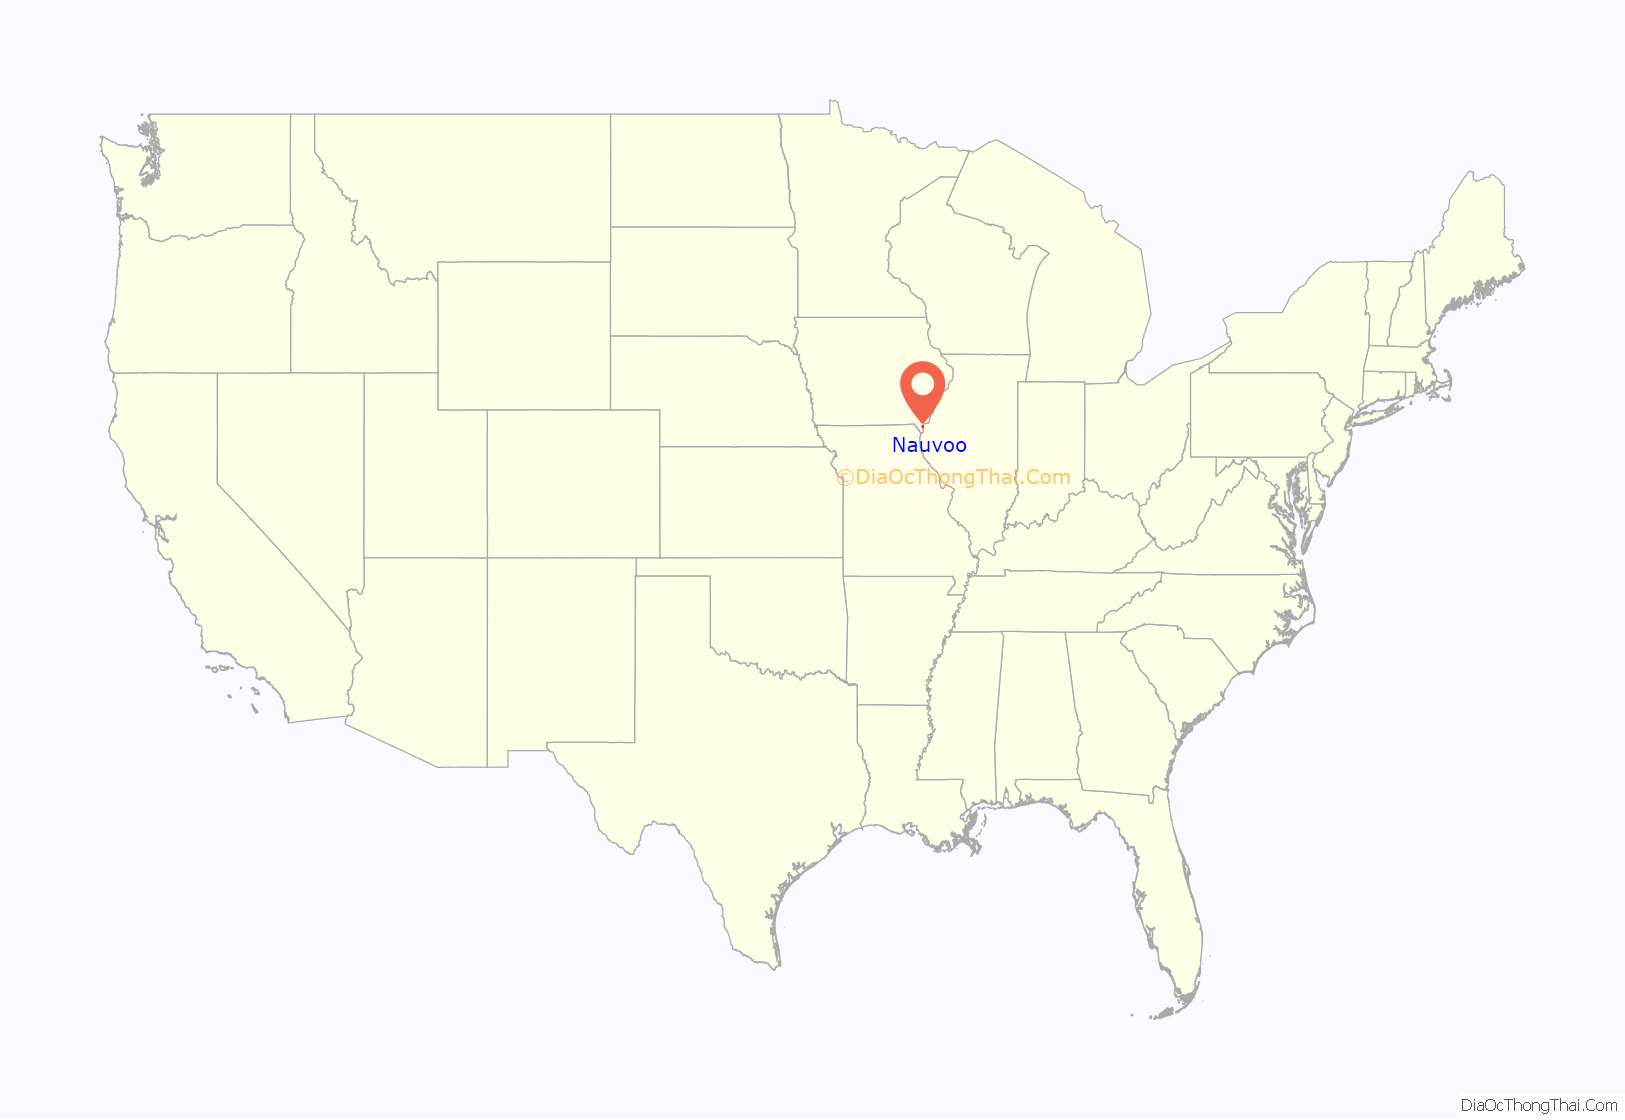 Map of Nauvoo city, Illinois